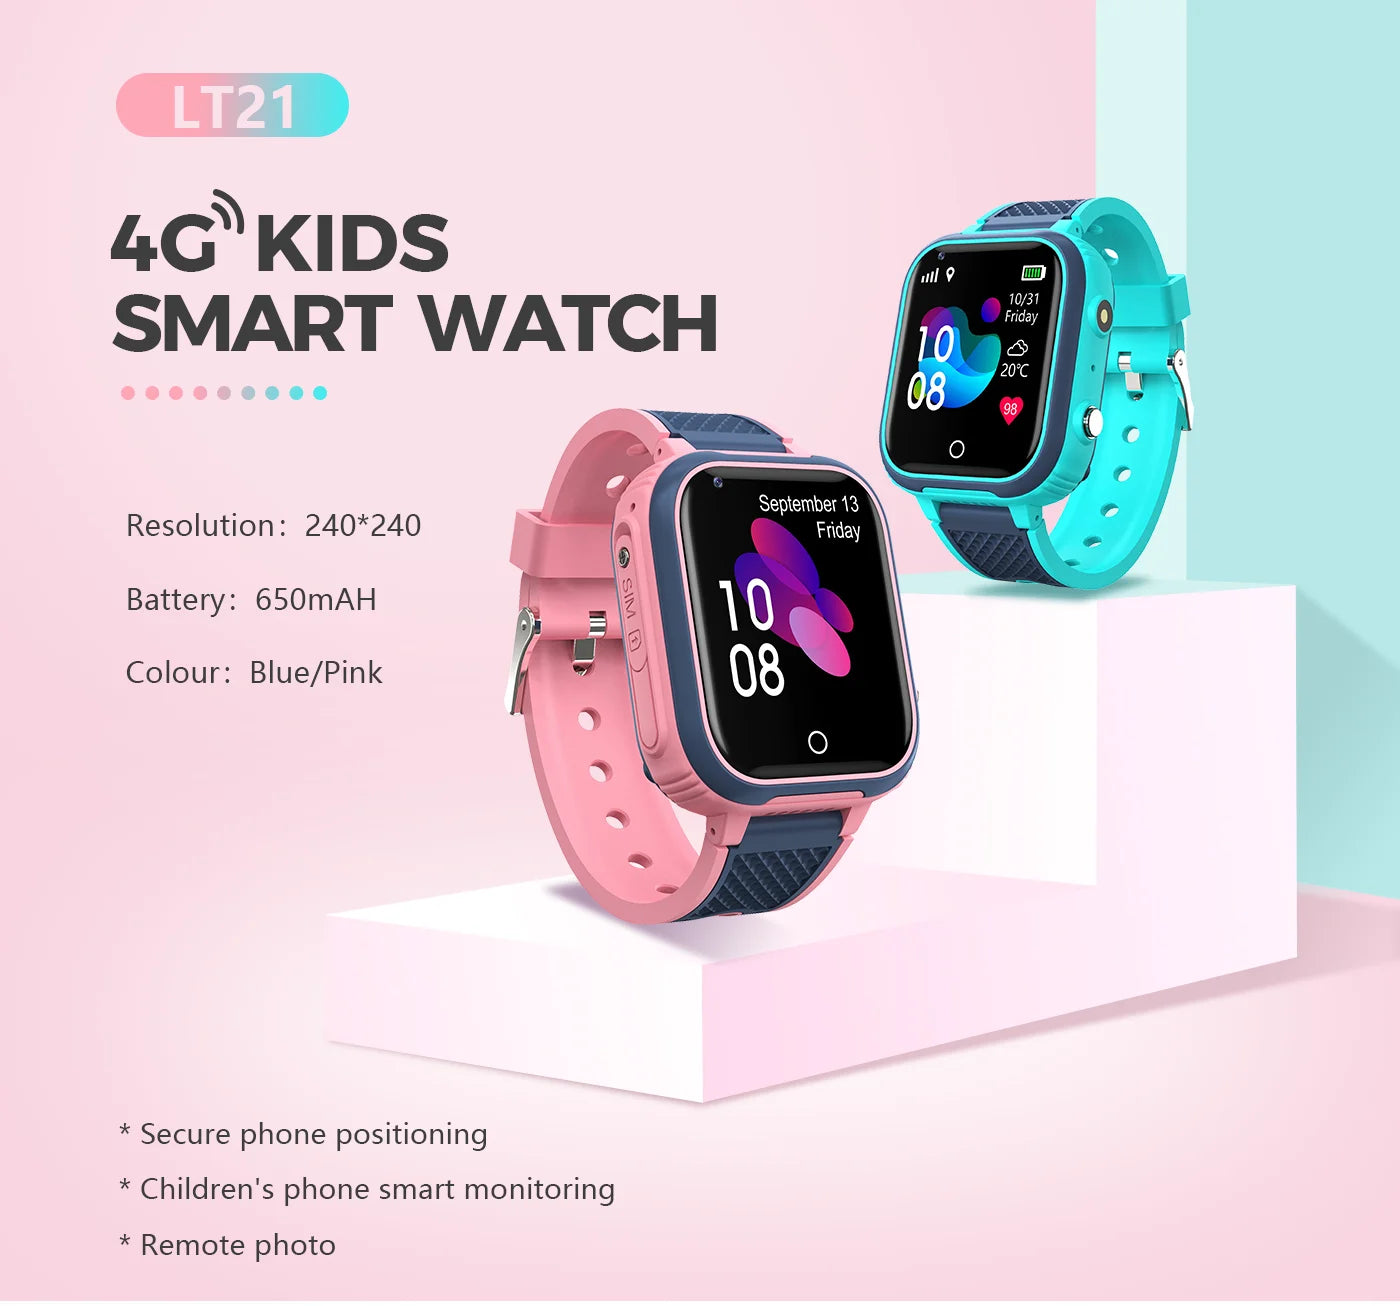 Kids 4G LT21 Smart Watch GPS Tracker WiFi Video Call SOS Waterproof Camera Monitor Voice Chat children Phone smartwatch